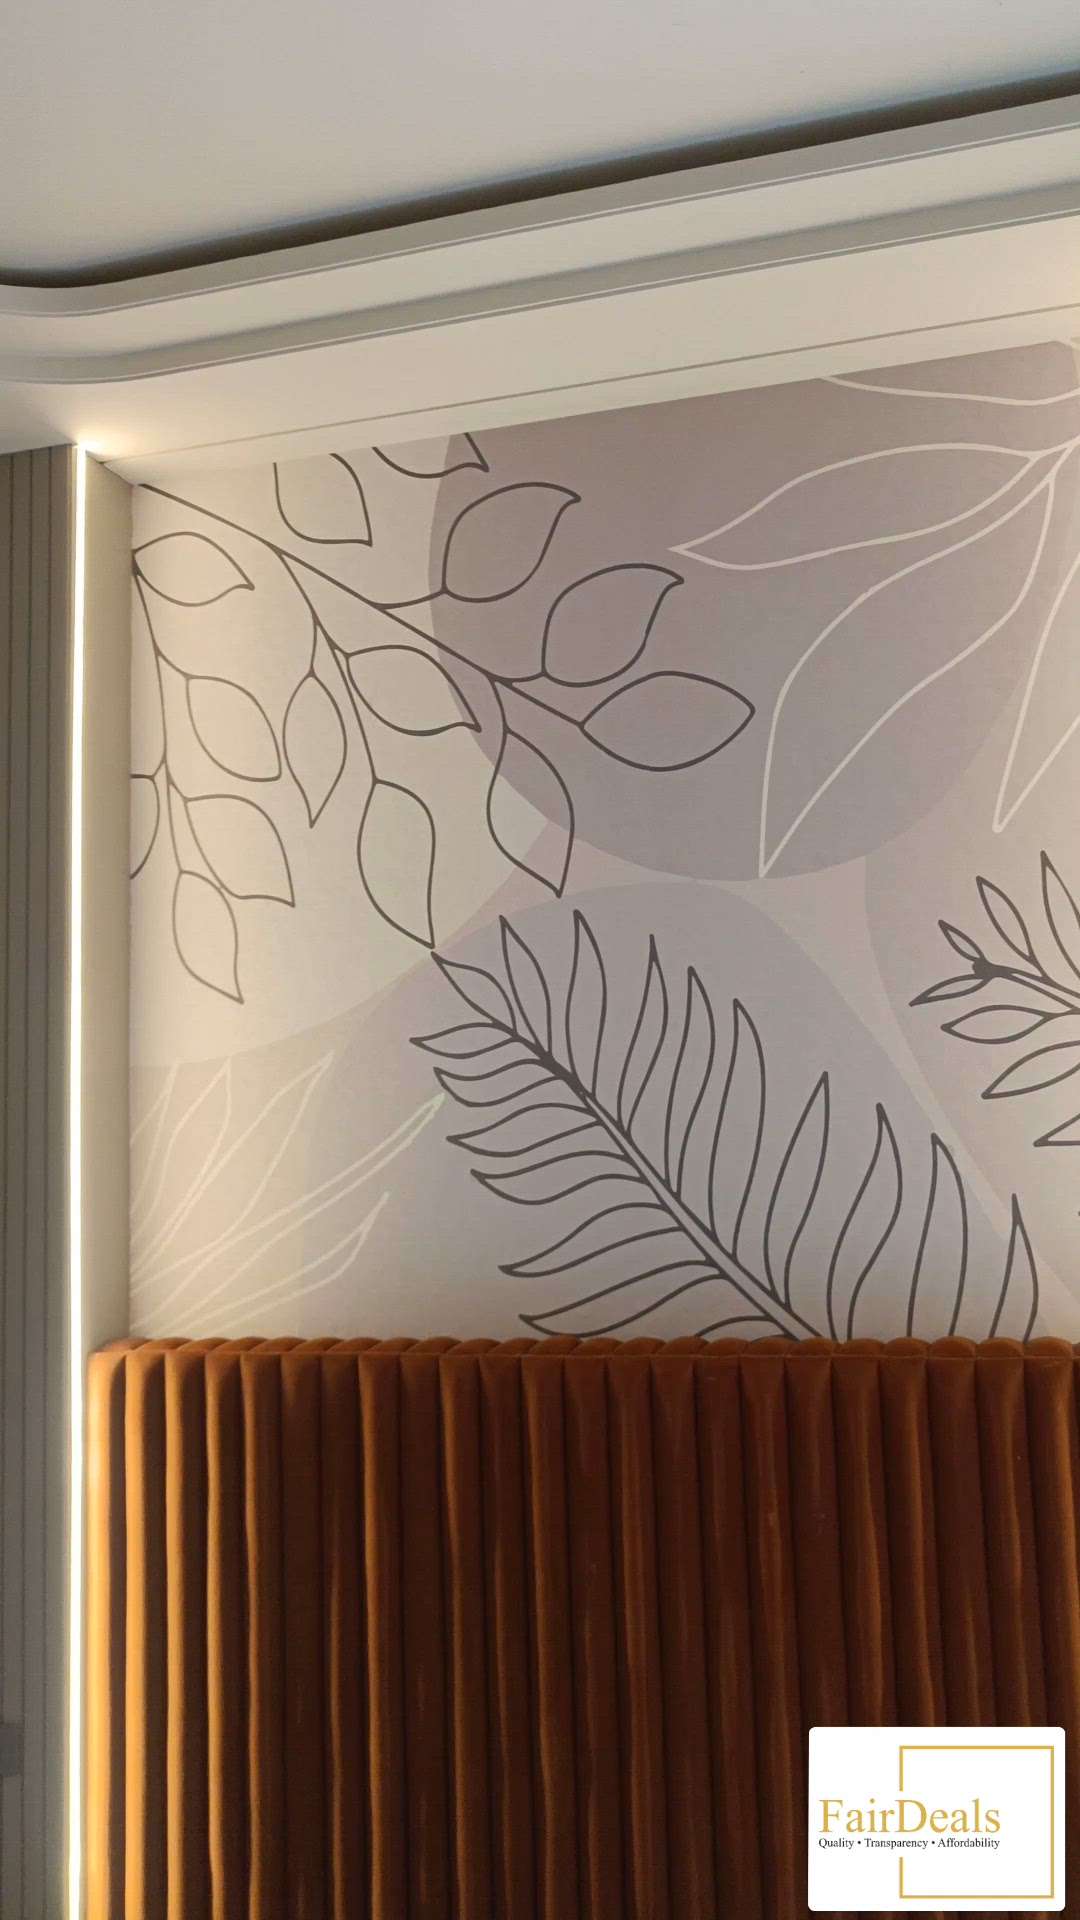 Customised Wallpaper Installed By FairDeals

Contact Us - 7878443883
                       8107940665
#fairdealsjaipur #fairdeals #LivingRoomWallPaper #customised_wallpaper #wallpaper #BedroomDesigns #WallDecors #WallDesigns #modernhome #bedbackdeisgn #HomeDecor #HomeAutomation #homedecoration #InteriorDesigner #interiordesign #PVCFalseCeiling #Pvc #pvcwallpanel #wallpaperrolles #wallpanel #louvers #blinds #curtains #WoodenFlooring #flooring #exteriordesigns #ElevationHome #ElevationDesign #jaipur #jaipurblog #jaipuri #jaipurcity #jaipurcityblog #pinkcity #pinkcityjaipur #jaipurhome #jaipurhomes #rajasthan #rajasthandiaries #interior_designer_in_rajasthan #Architectural&Interior #Architect #architecturedesigns #alwar #alwararchitect #sikar #sikararchitect #jodhpur #jodhpurinterior #udaipur #jaisalmer #vaishalinagar #vaishalinagarjaipur #malviyanagarjaipur #rajaparkarchitect #rajapark #mansarovar #CivilEngineer #interiorcontractors #LUXURY_INTERIOR #BedroomDecor #MasterBedroom #Livingr